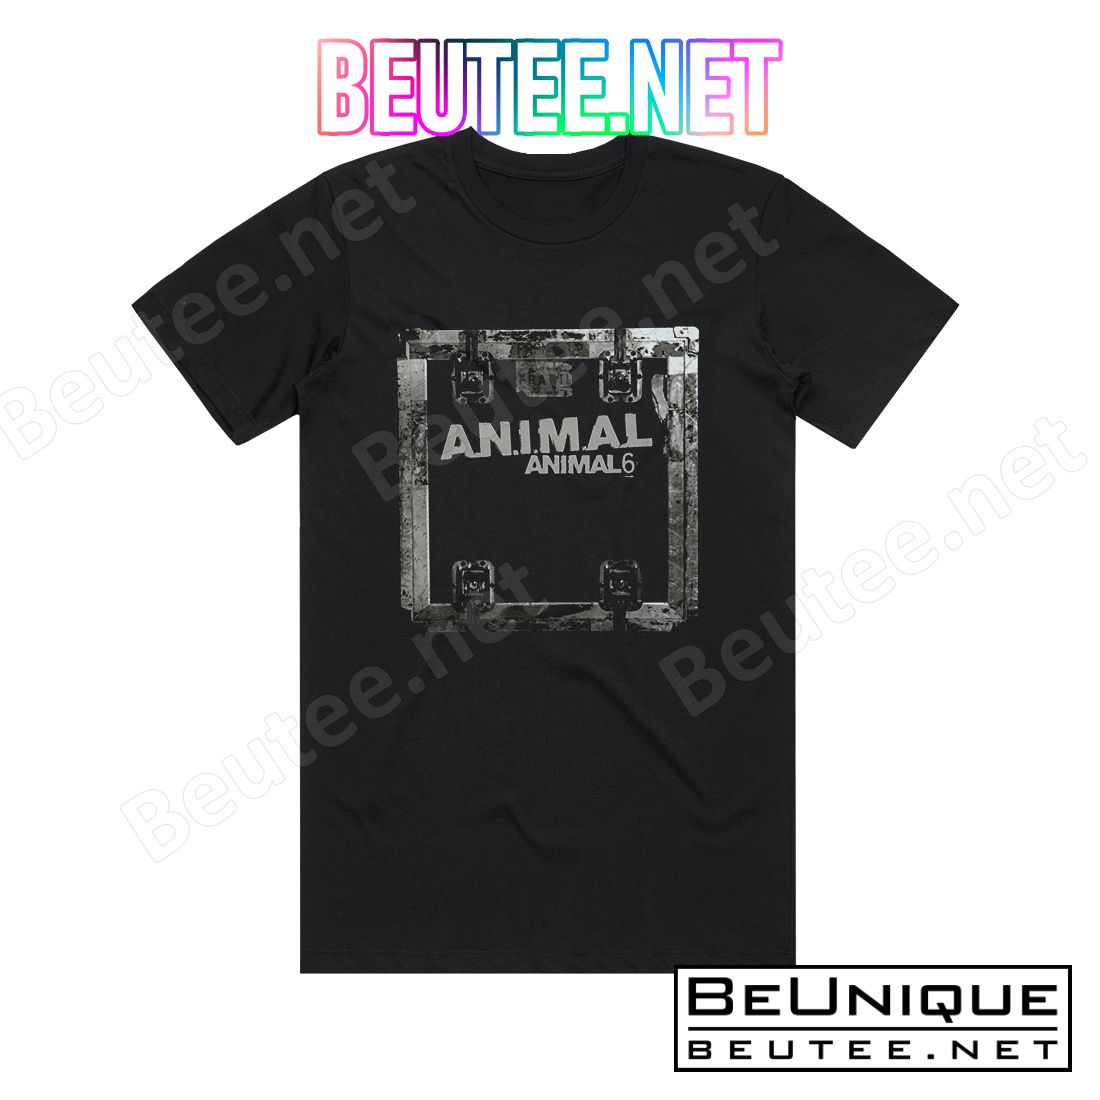 A.N.I.M.A.L. Animal 6 Album Cover T-Shirt